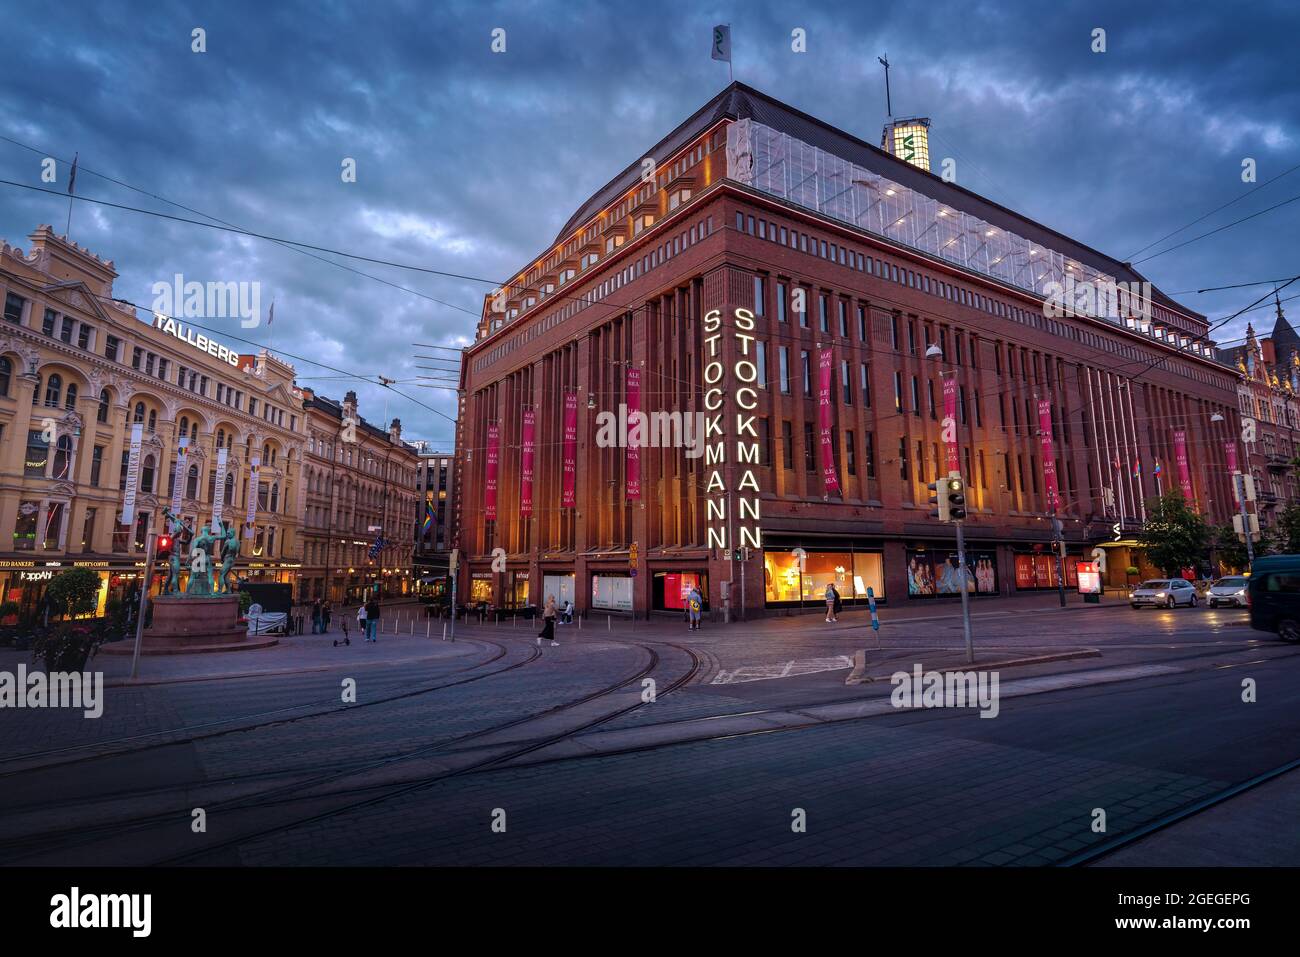 Stockmann Department Store in Mannerheimintie Street at night - Helsinki, Finland Stock Photo